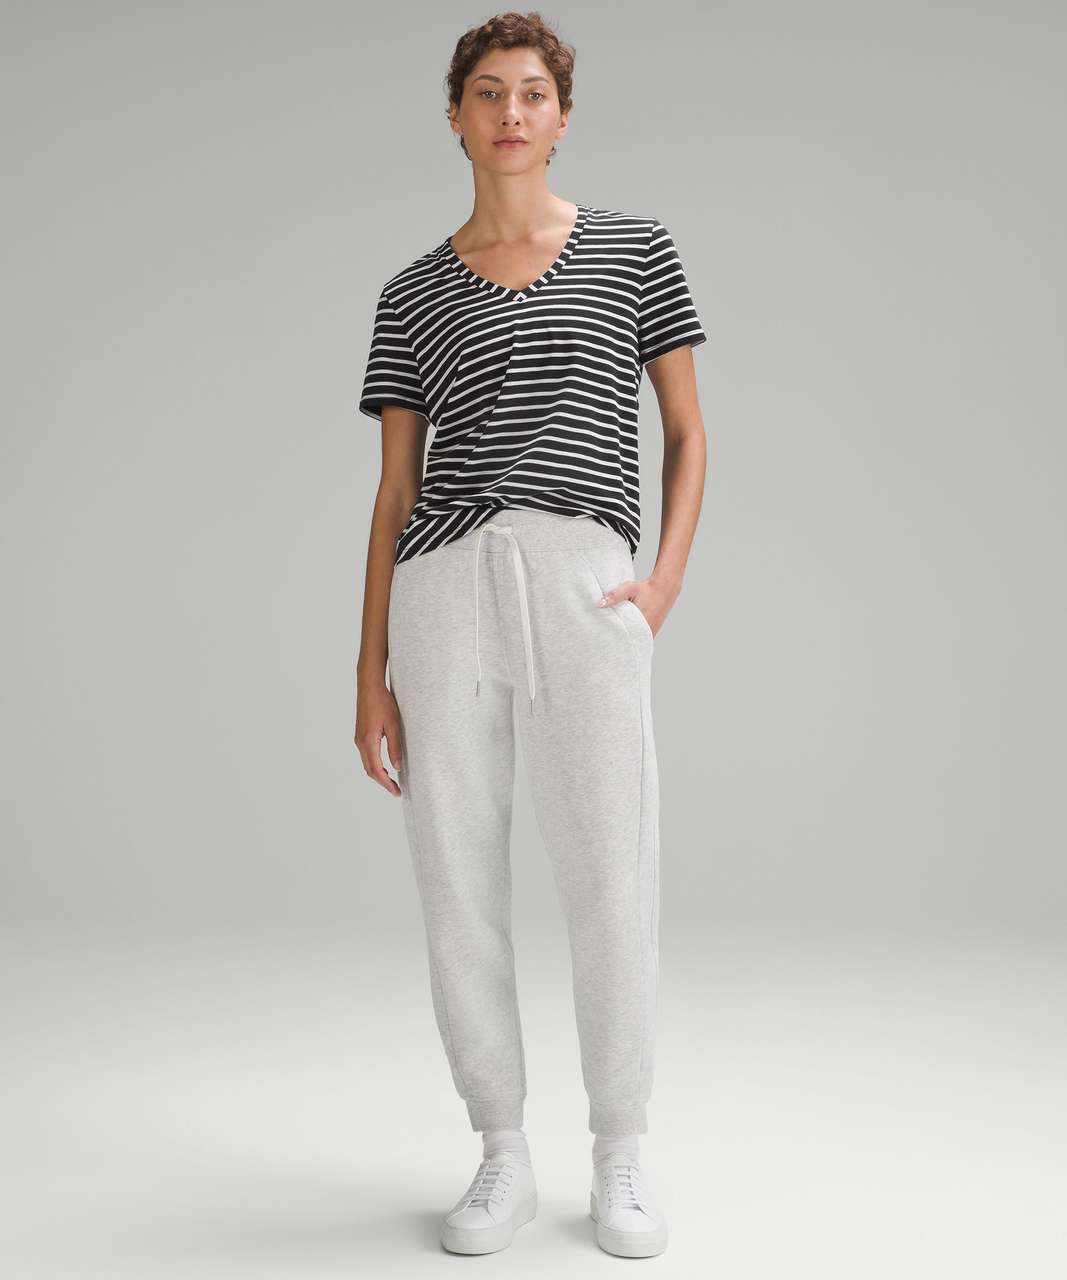 Lululemon Love V-Neck T-Shirt - Yachtie Stripe Black White